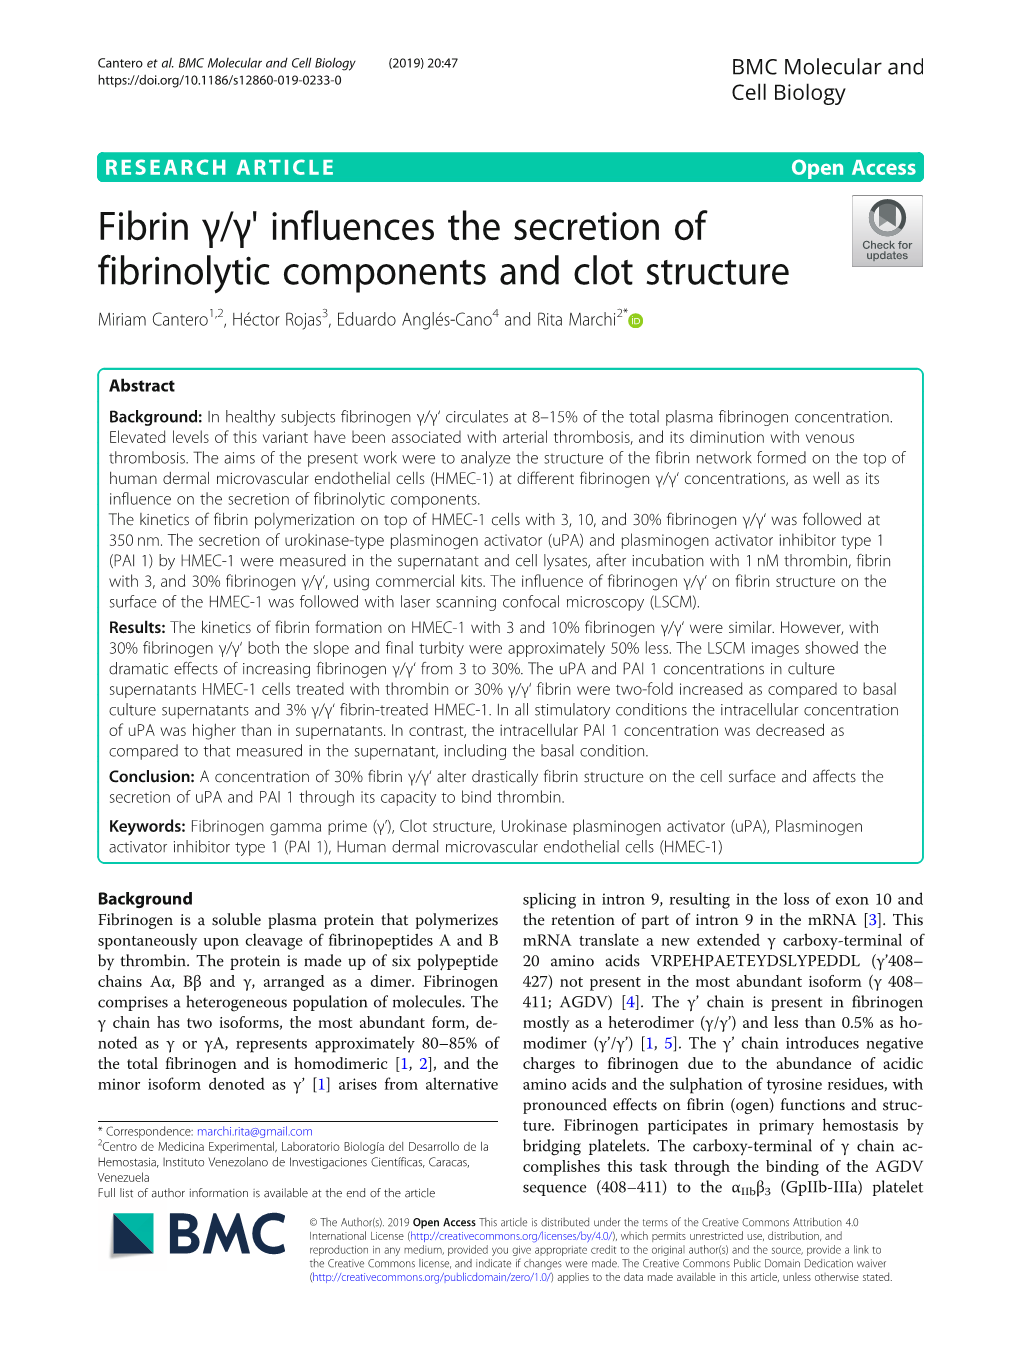 Fibrin Γ/Γ' Influences the Secretion of Fibrinolytic Components and Clot Structure Miriam Cantero1,2, Héctor Rojas3, Eduardo Anglés-Cano4 and Rita Marchi2*